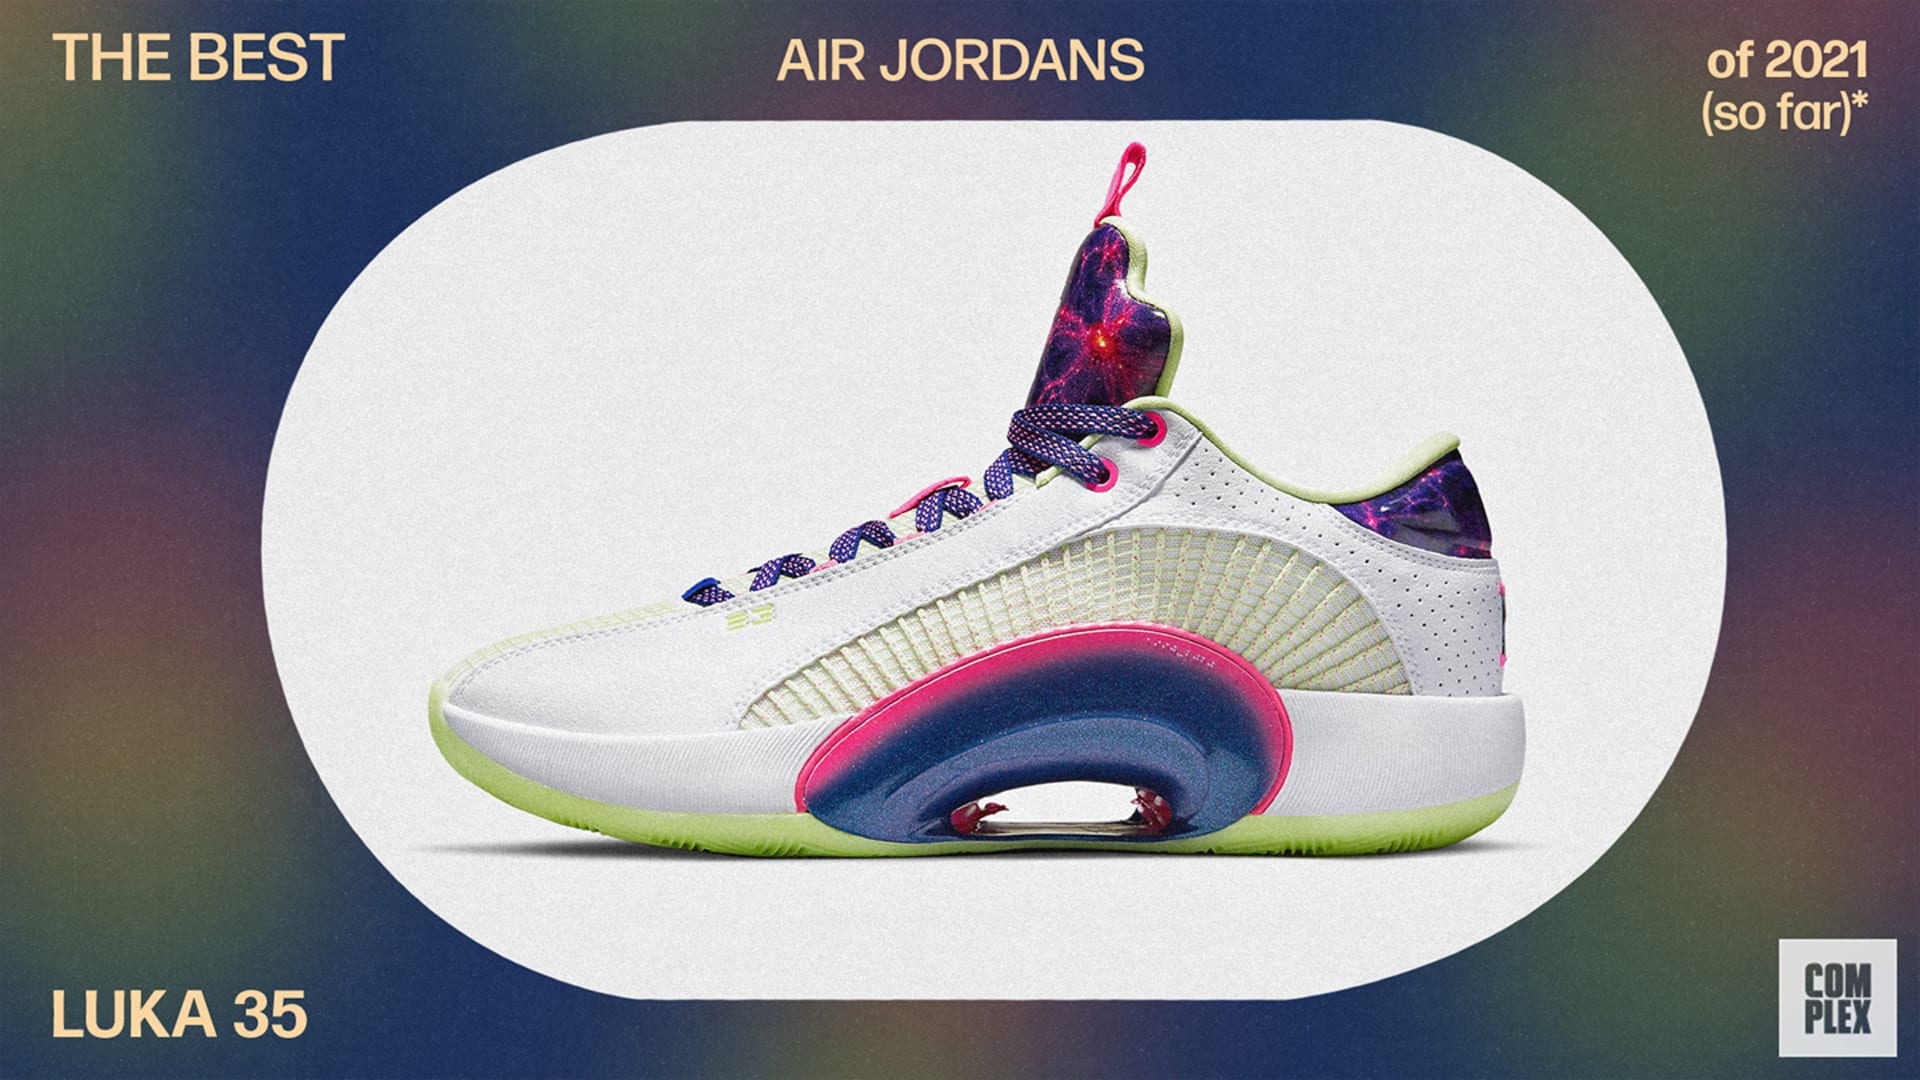 air jordan latest shoes 2021